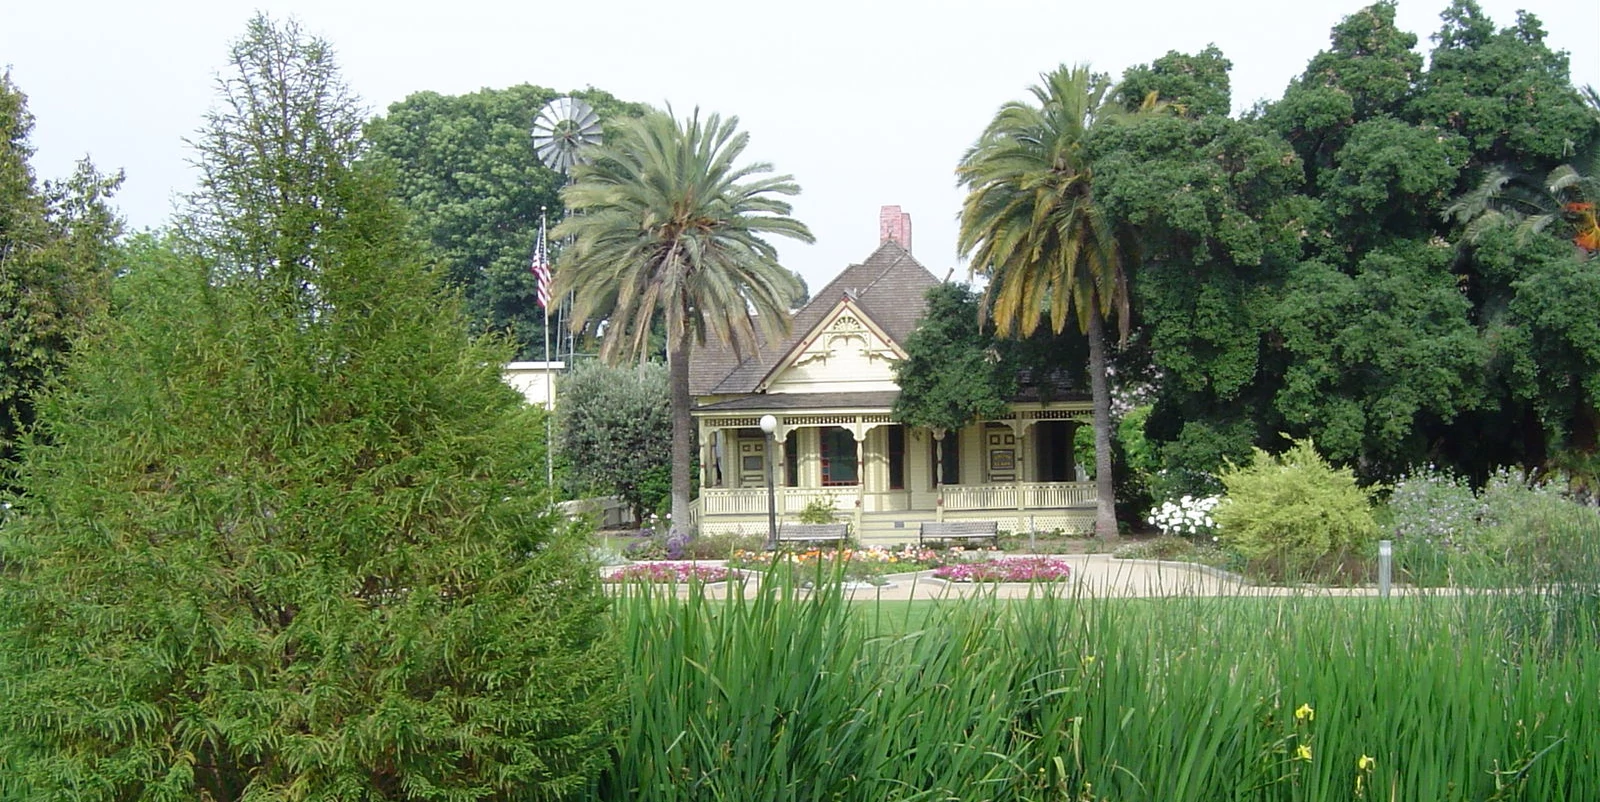 CSU Fullerton Arboretum courtesy of wikimedia commons